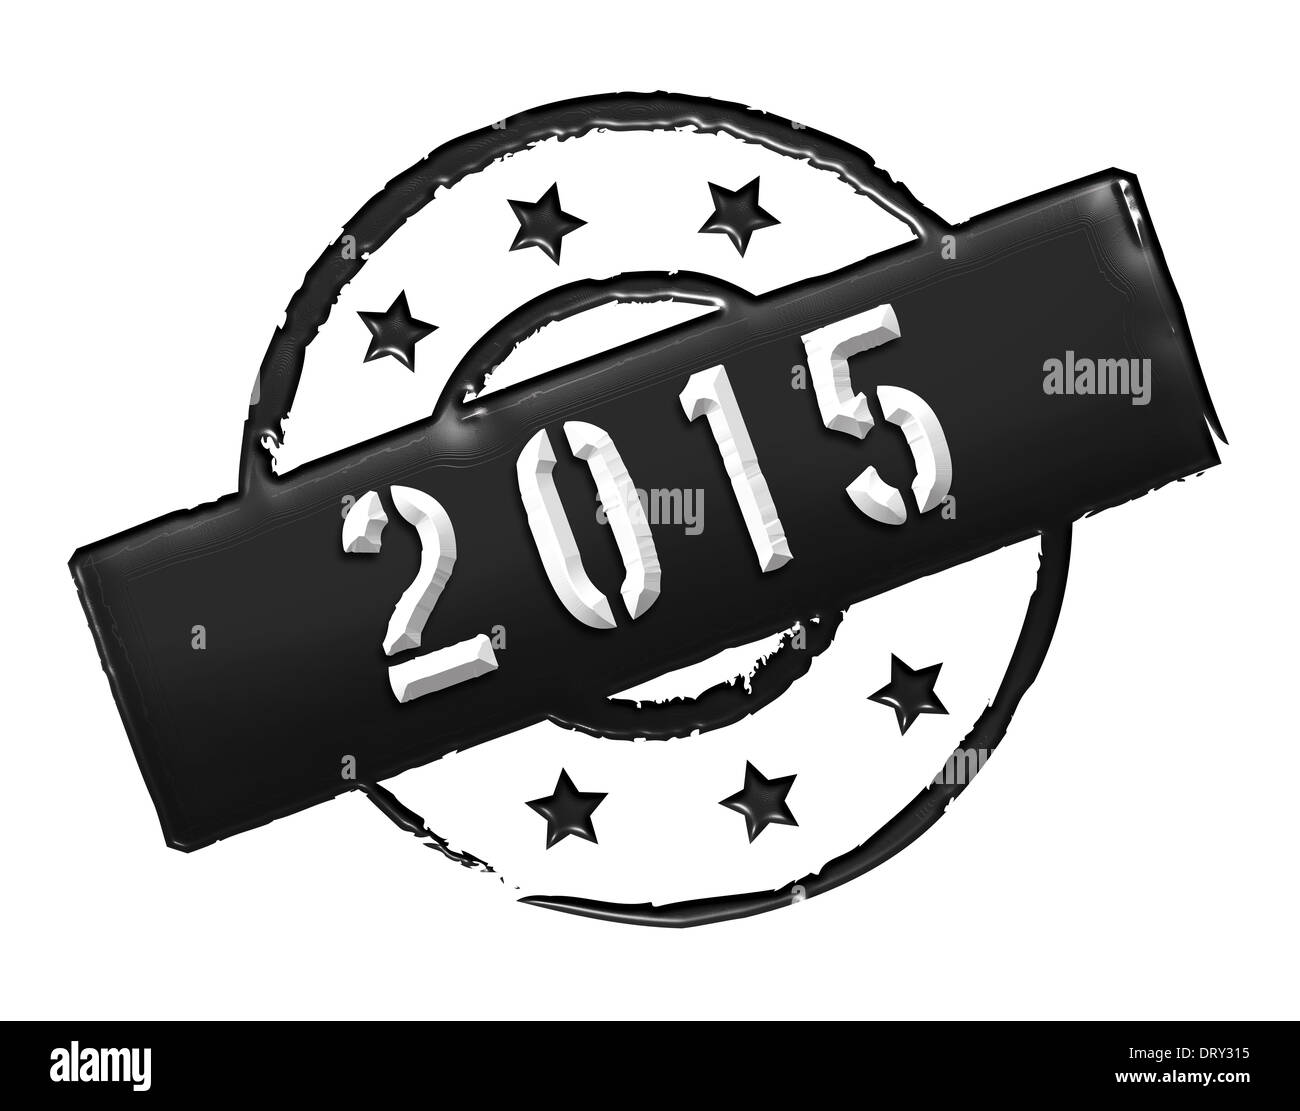 2015 - Stamp Stock Photo